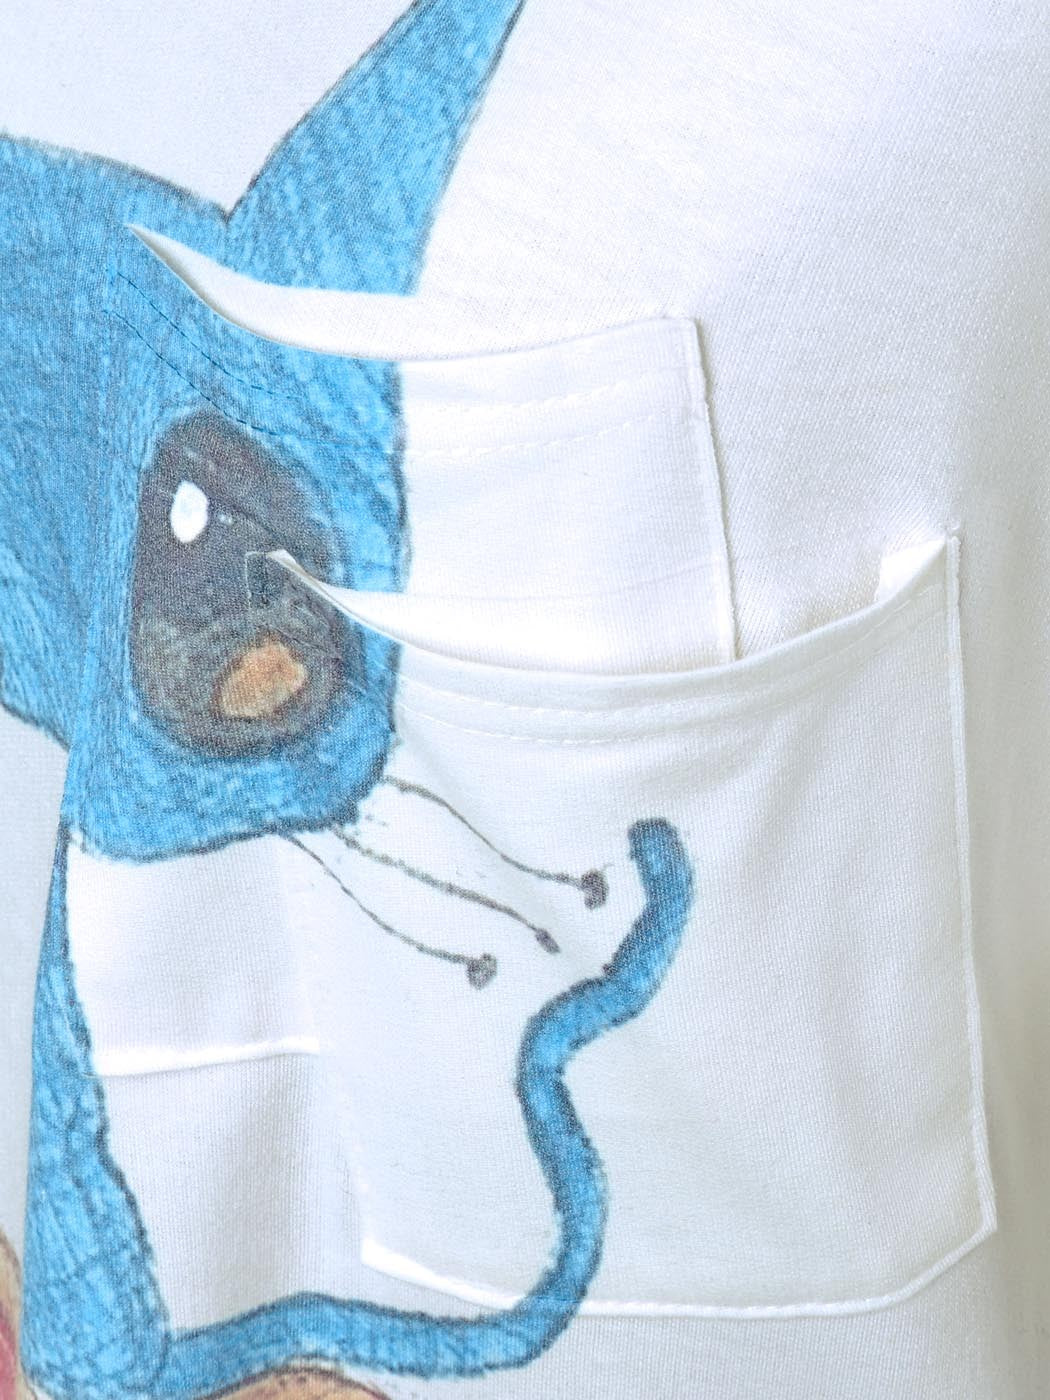 S/M Fit Crisp White L/S Fashion T-Shirt w Cartoon Kitty Cat Image